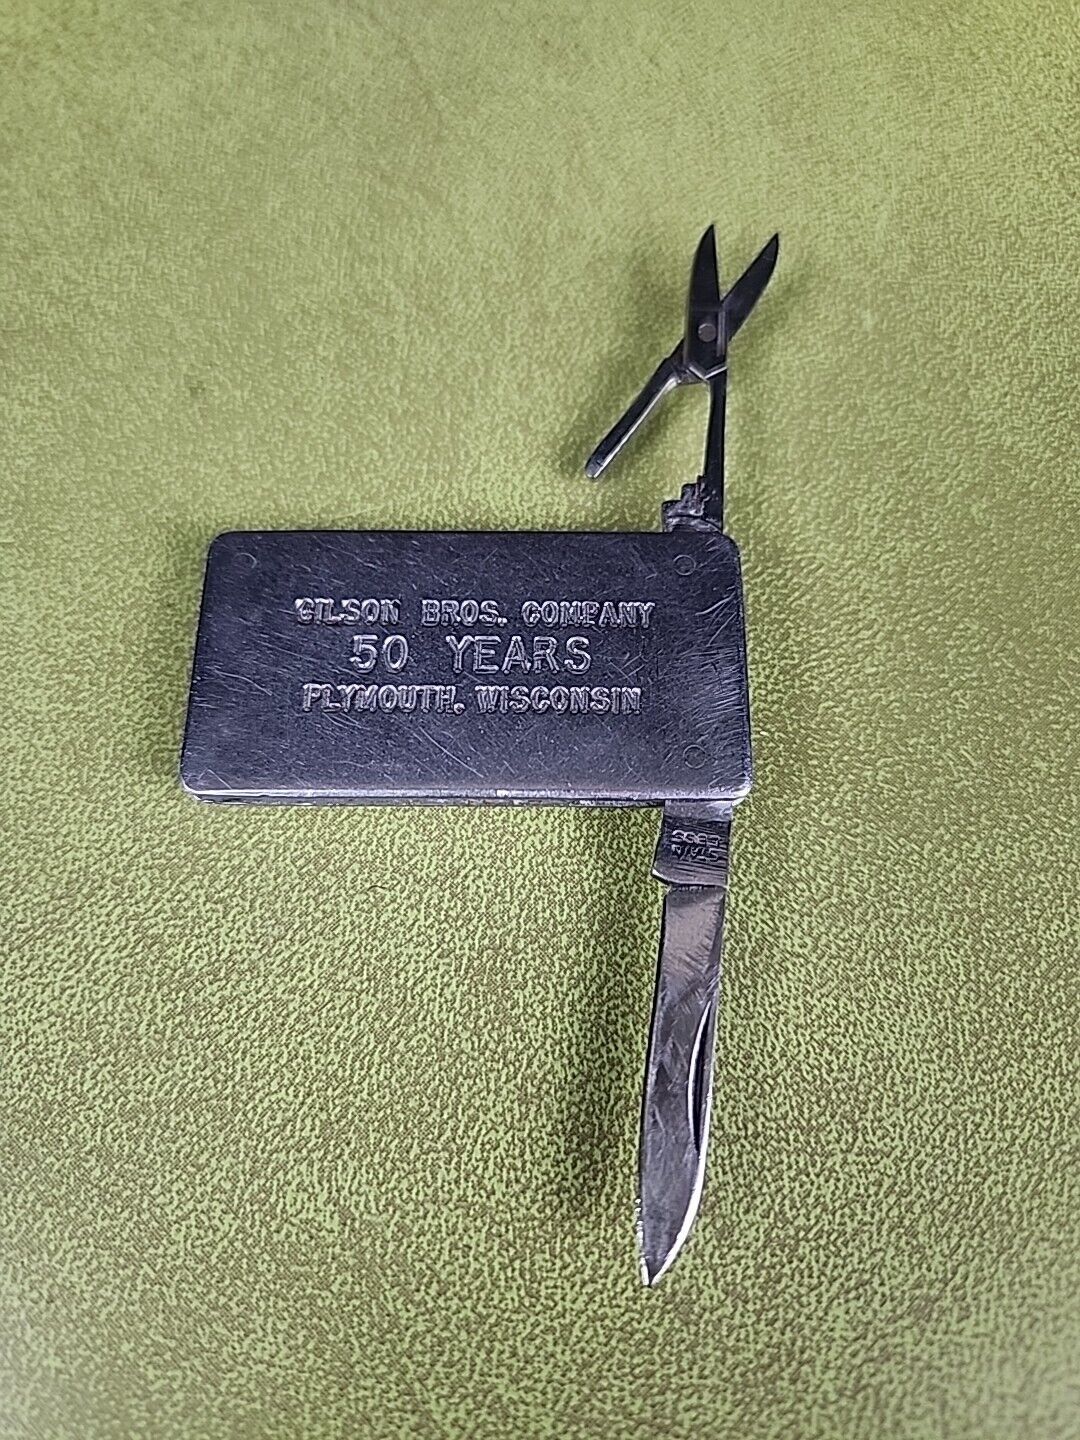 Gilson Bros Company 50 Years Money Clip Pocket Knife Plymouth Wisconson M1